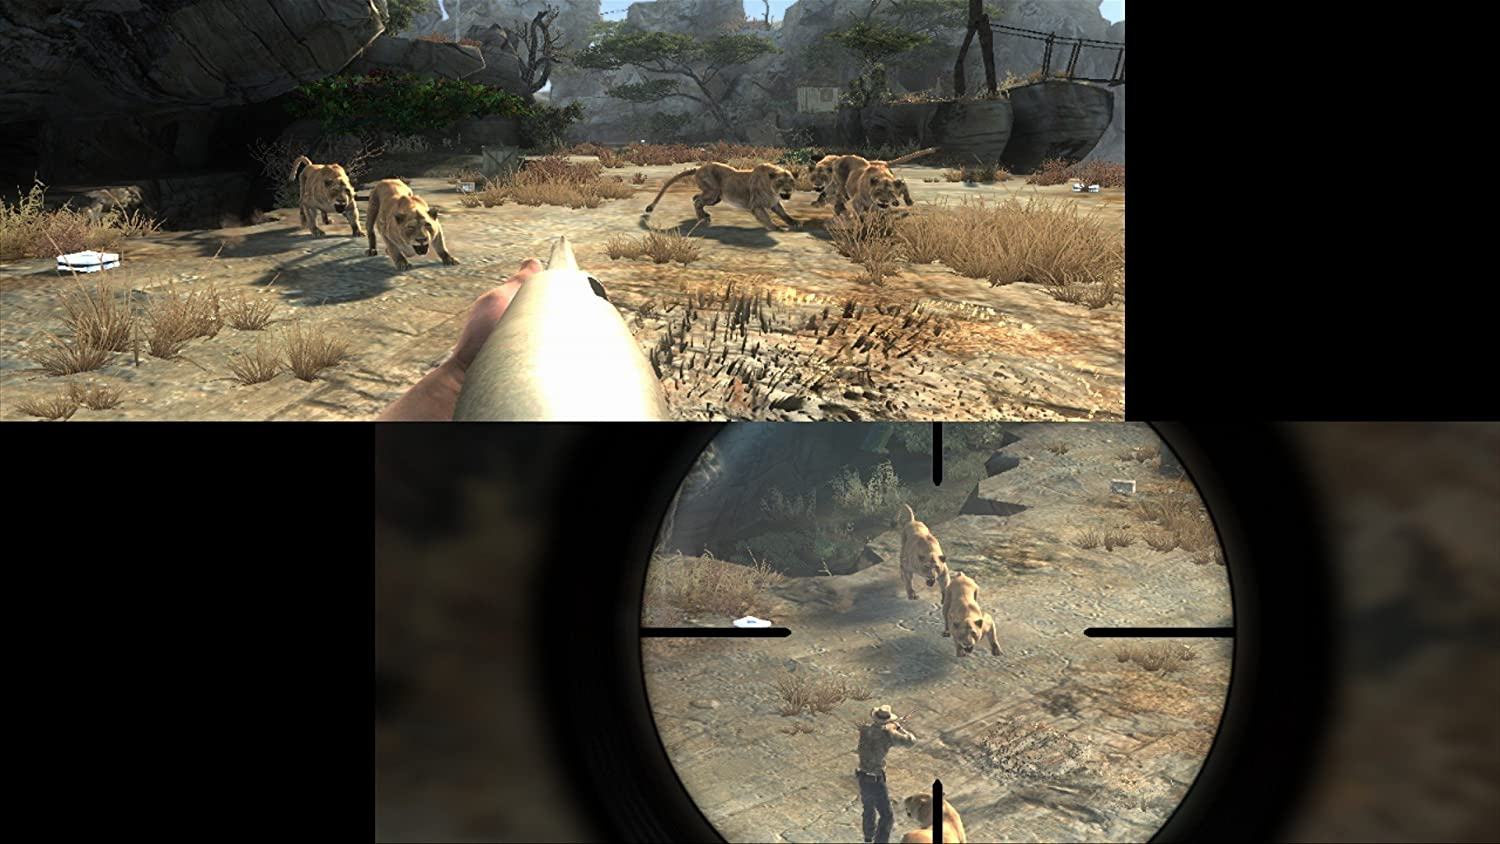 Cabela\'s Dangerous Fearmaster Top Hunts [PlayStation Shot 2013 3] inkl. 